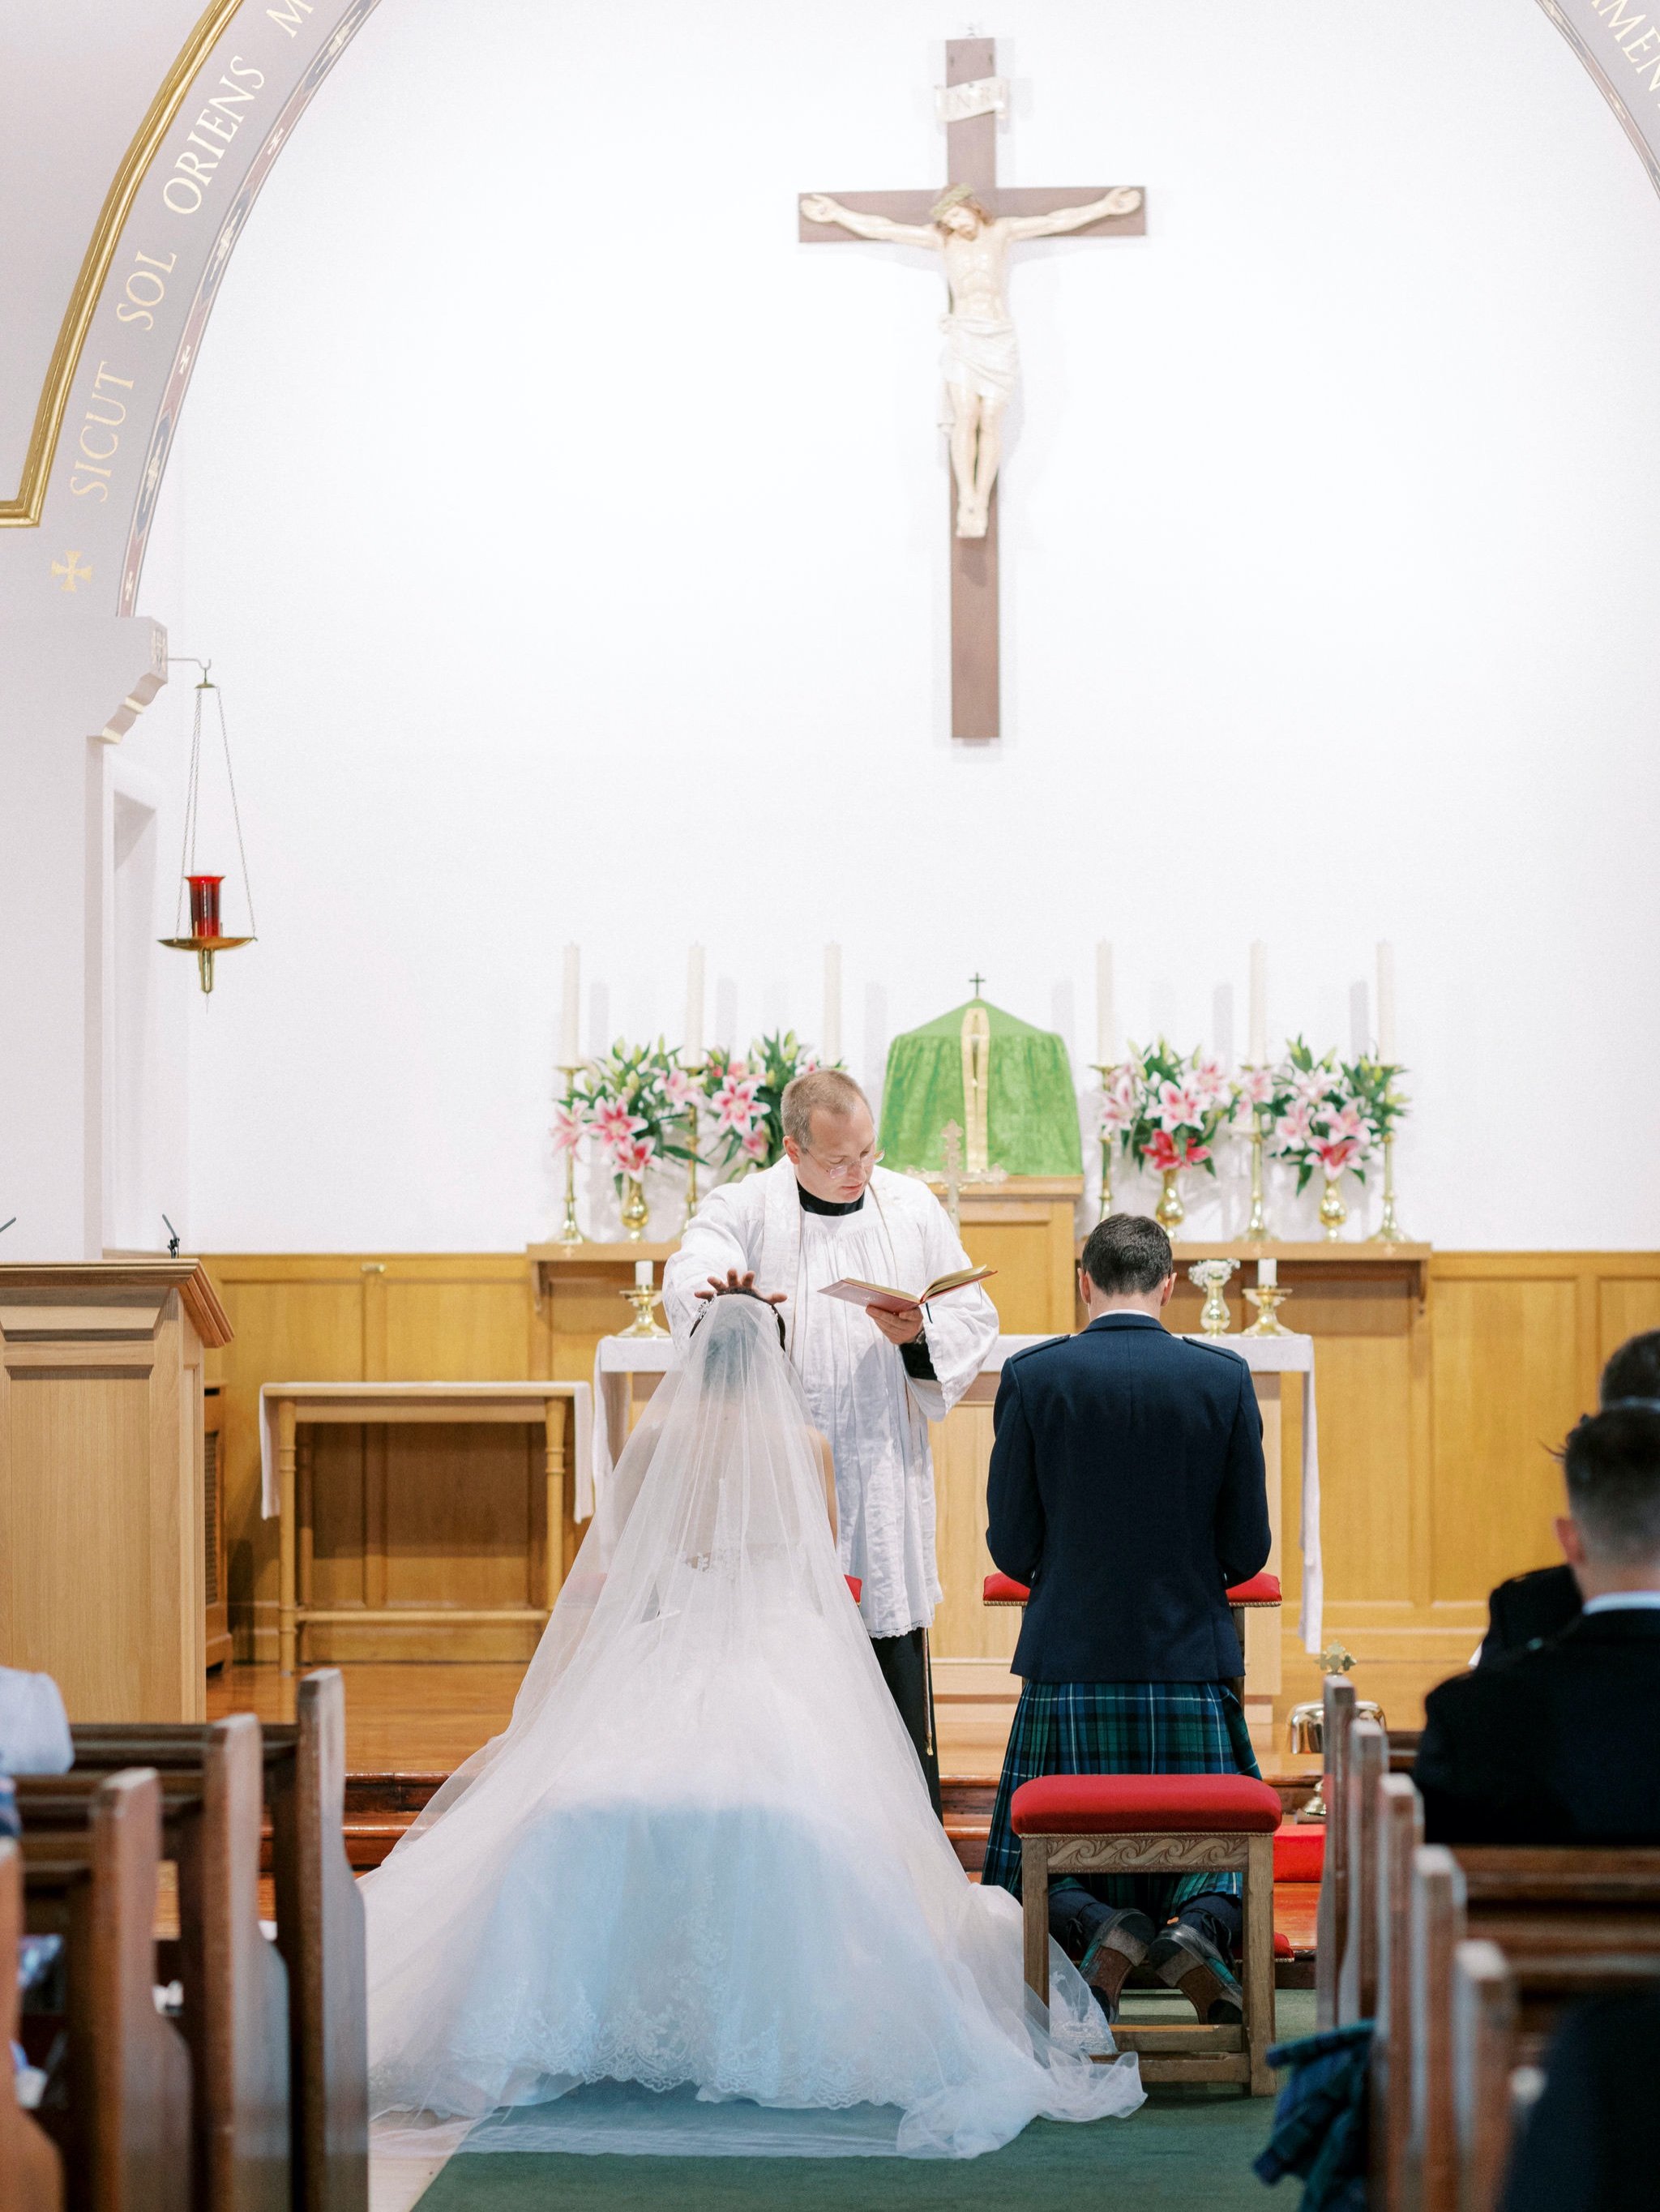 16_wedding ceremony at St Margaret's Catholic Church South Queensferry Edinburgh.jpg